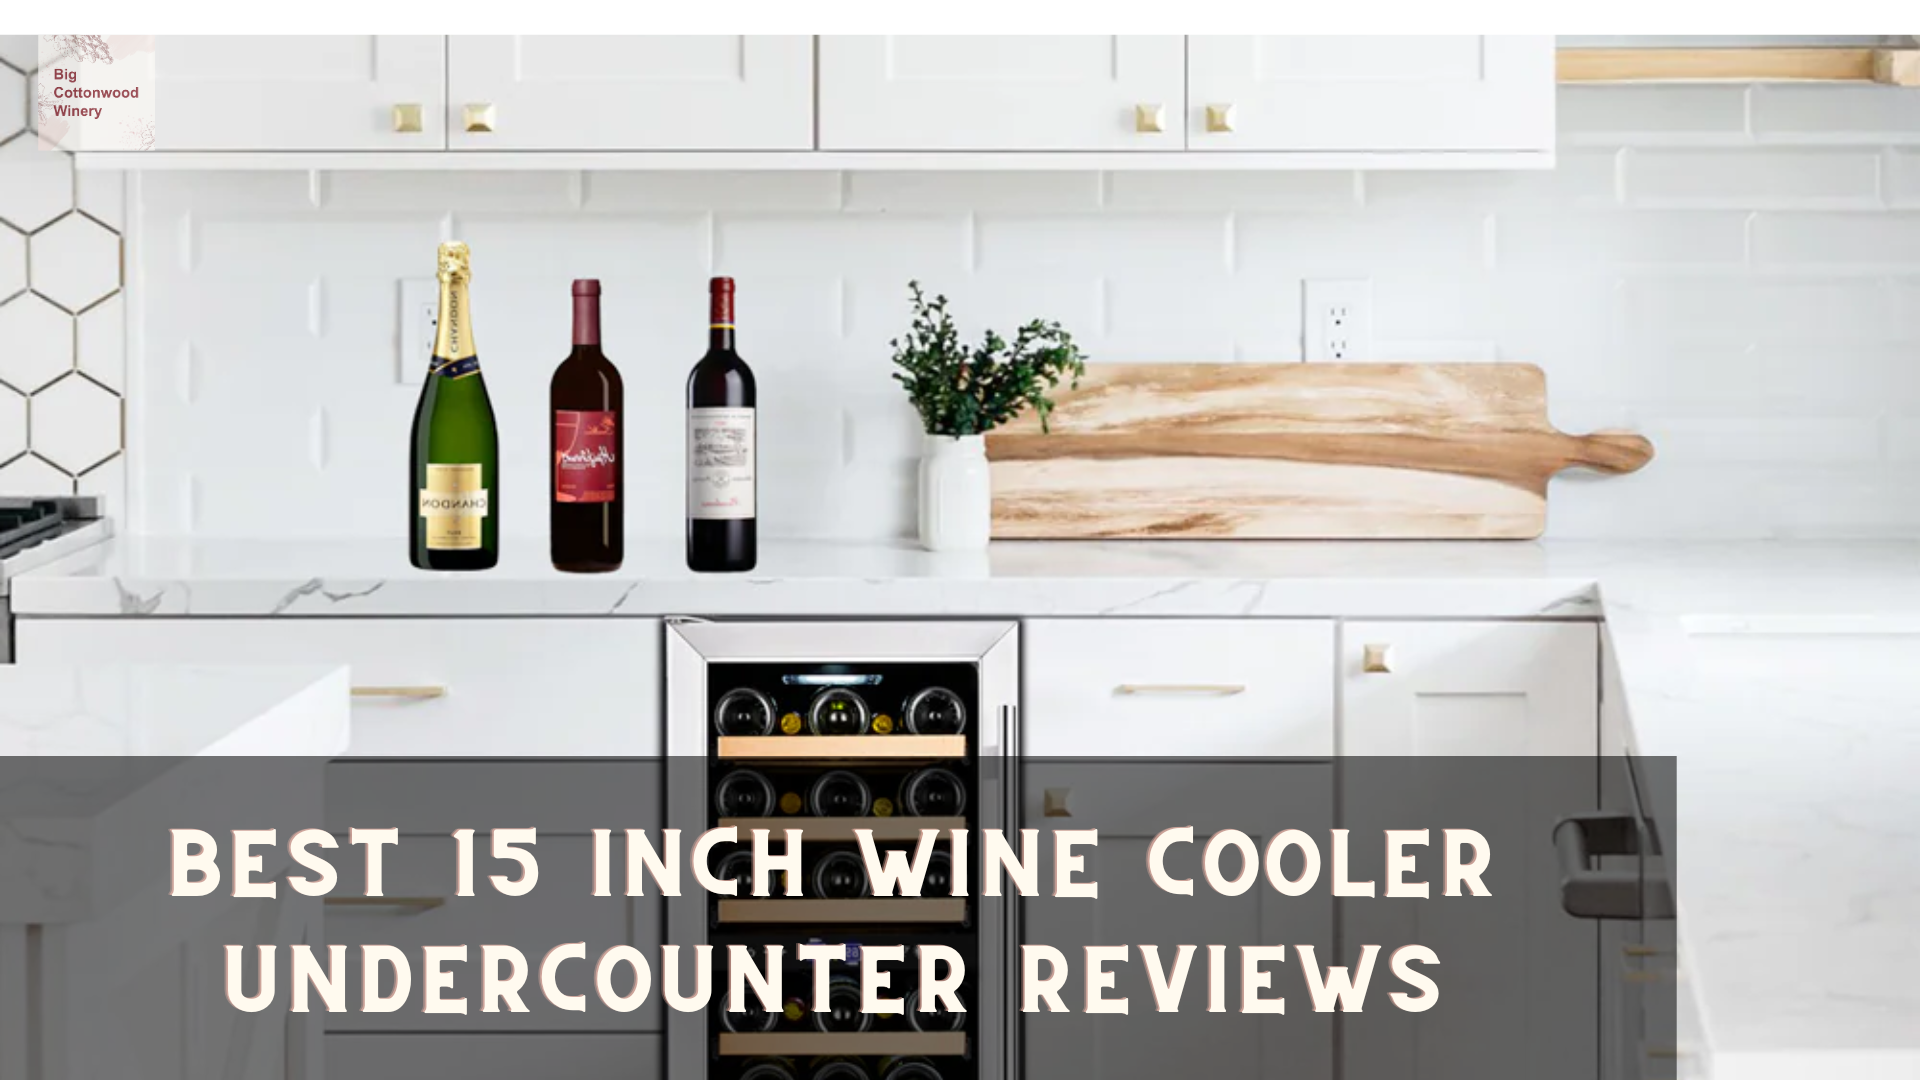 Best 15 Inch Wine Cooler Undercounter Reviews: